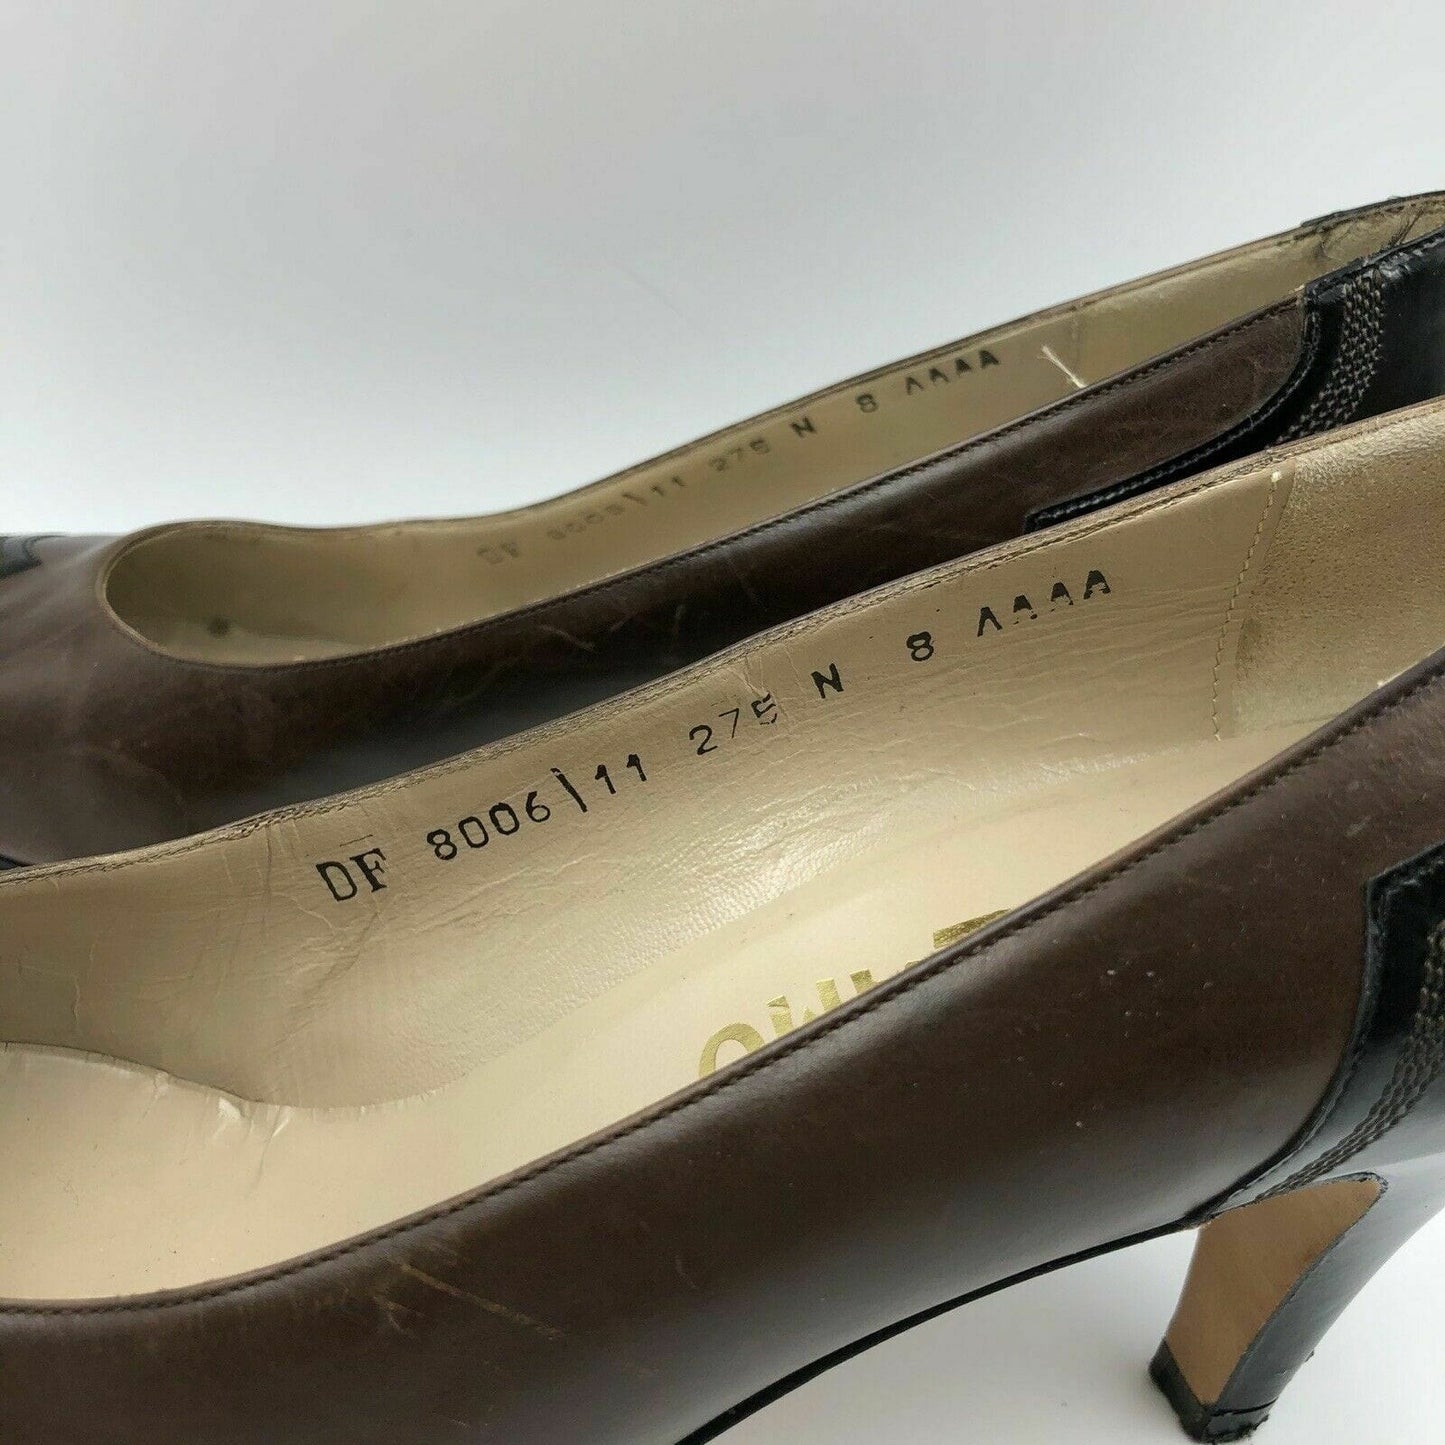 Salvatore Ferragamo Womens Brown Leather Black Patent Shoes Heels Pumps 8AAAA